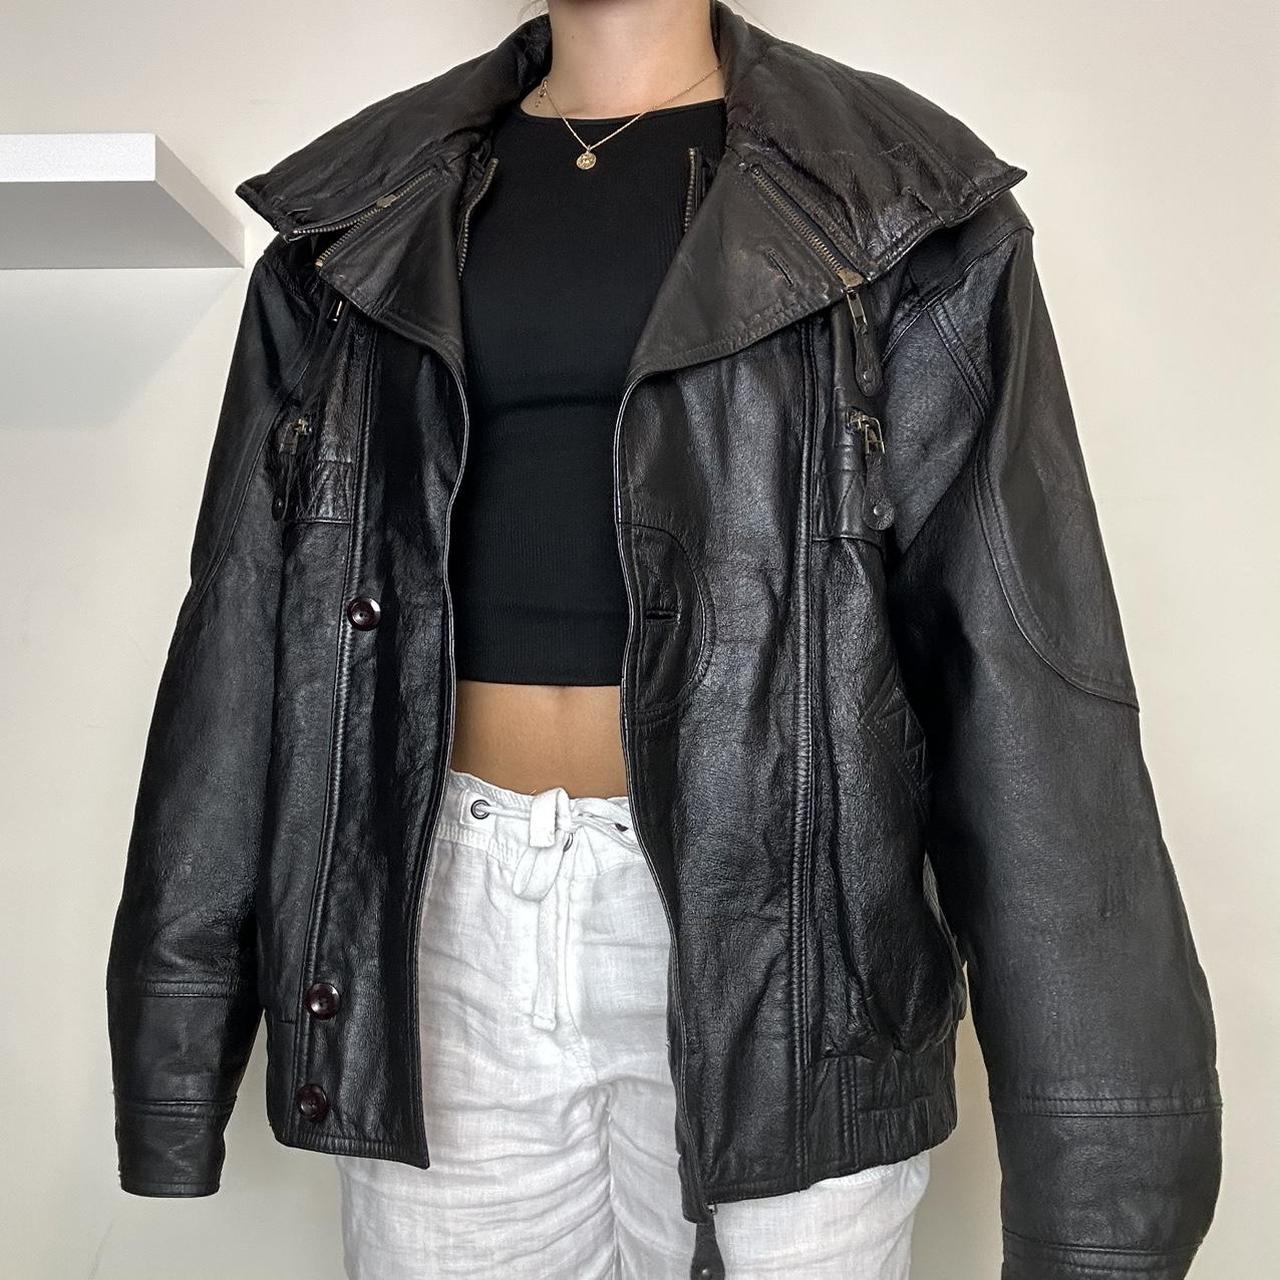 Unbranded Women's Black Jacket | Depop